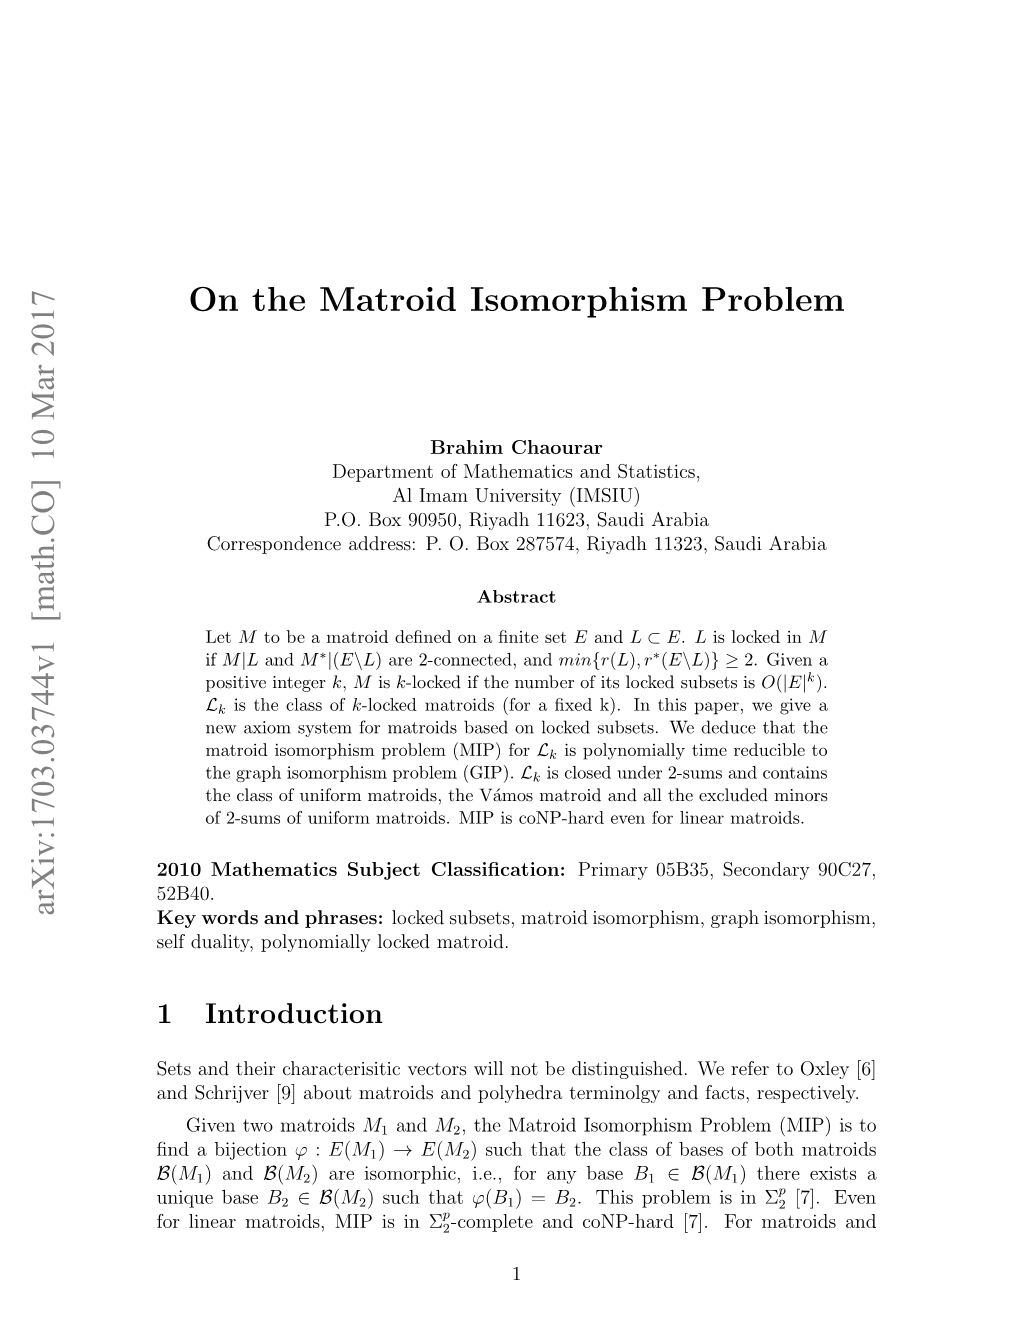 On the Matroid Isomorphism Problem